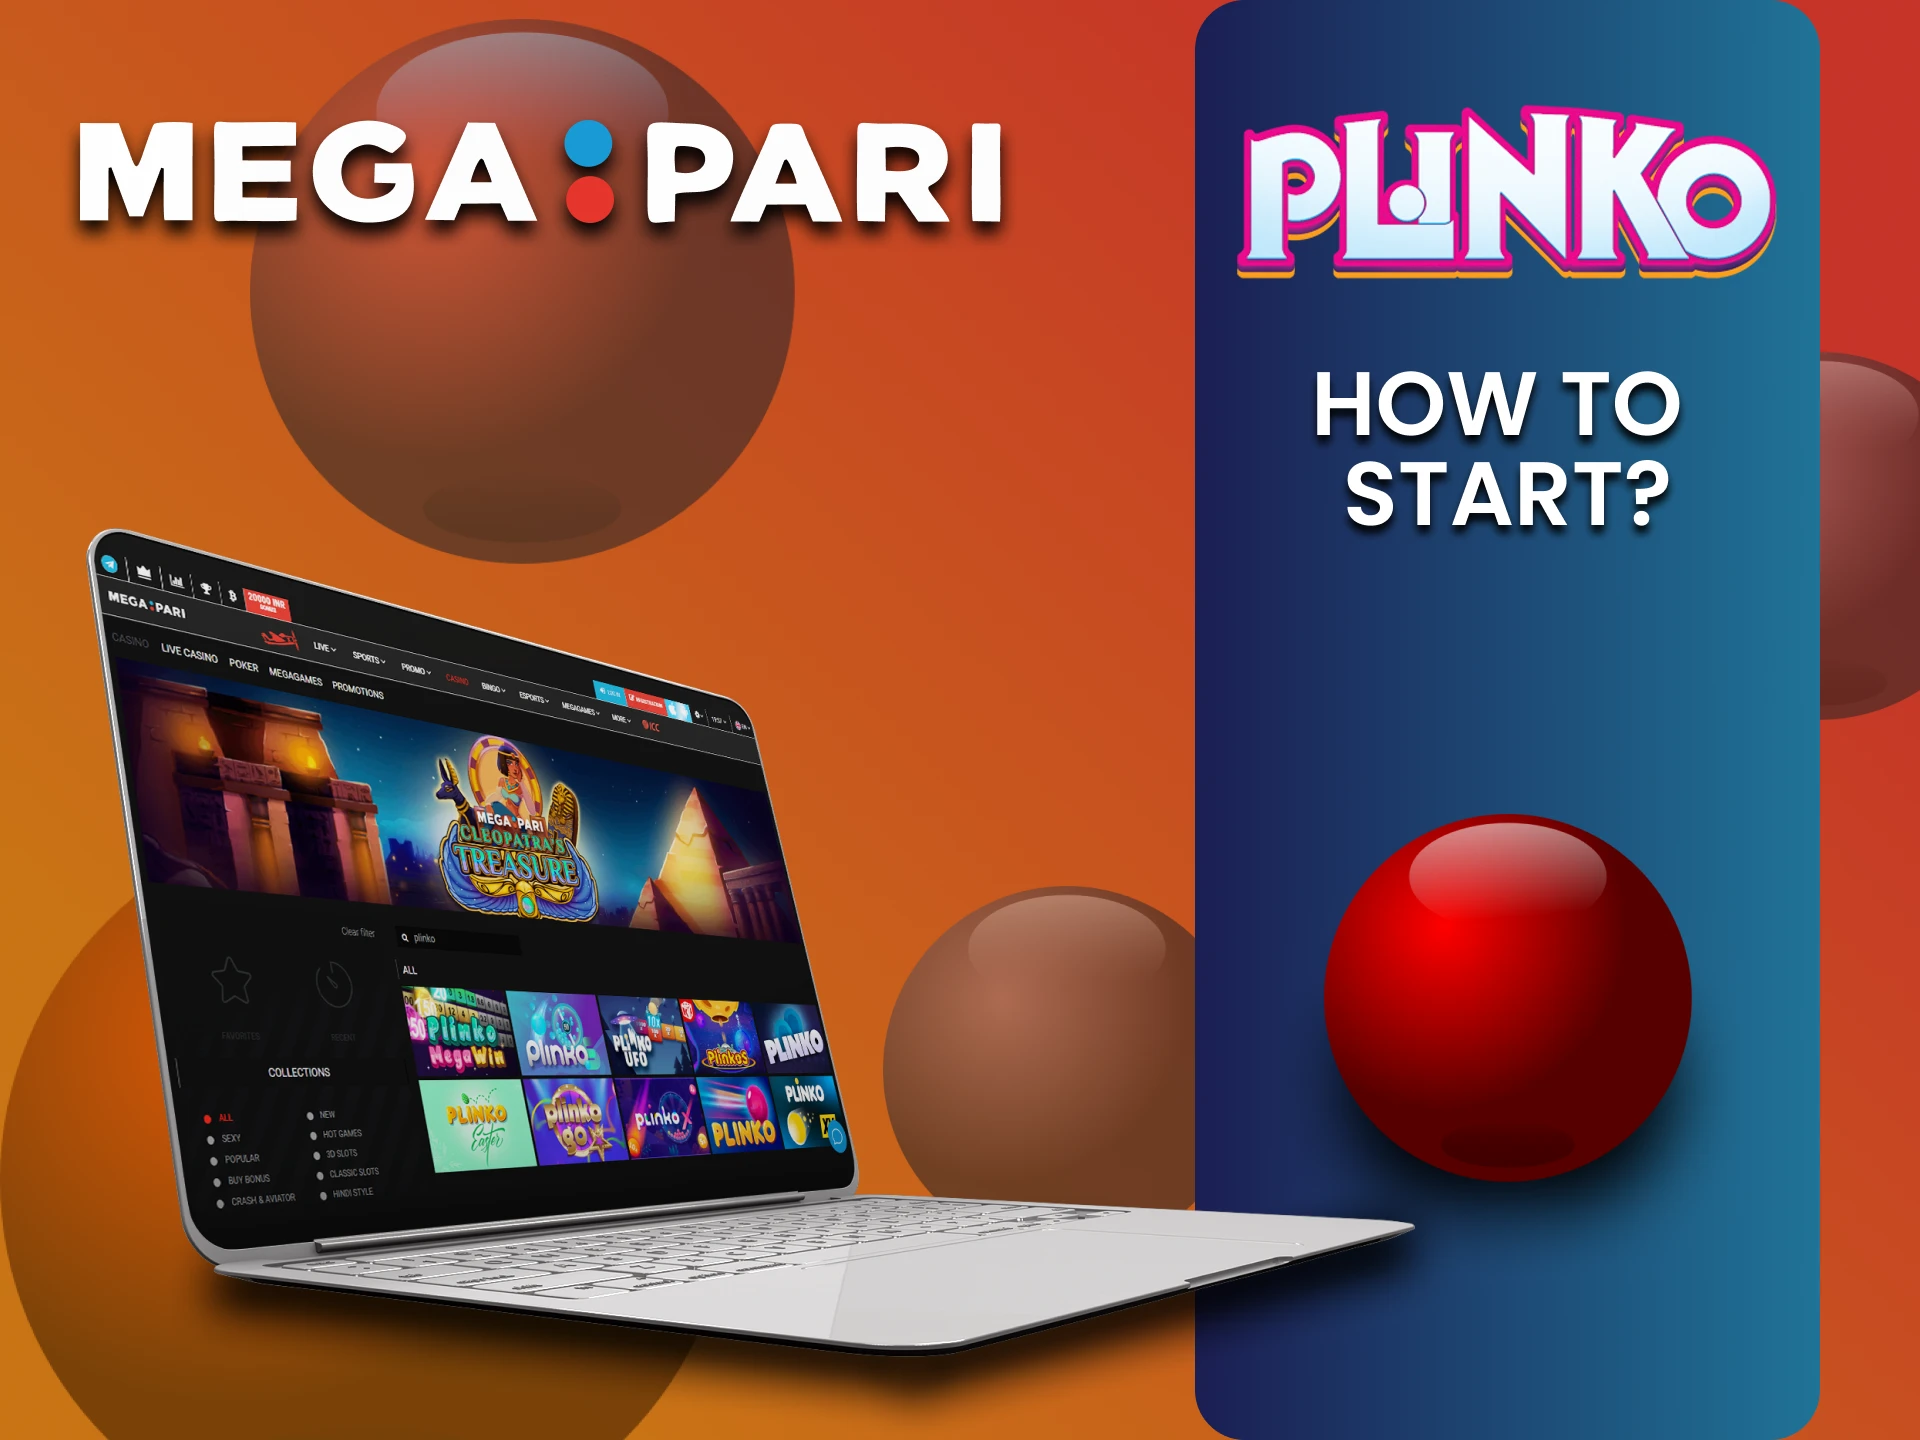 Select the desired section of Megapari to play Plinko.